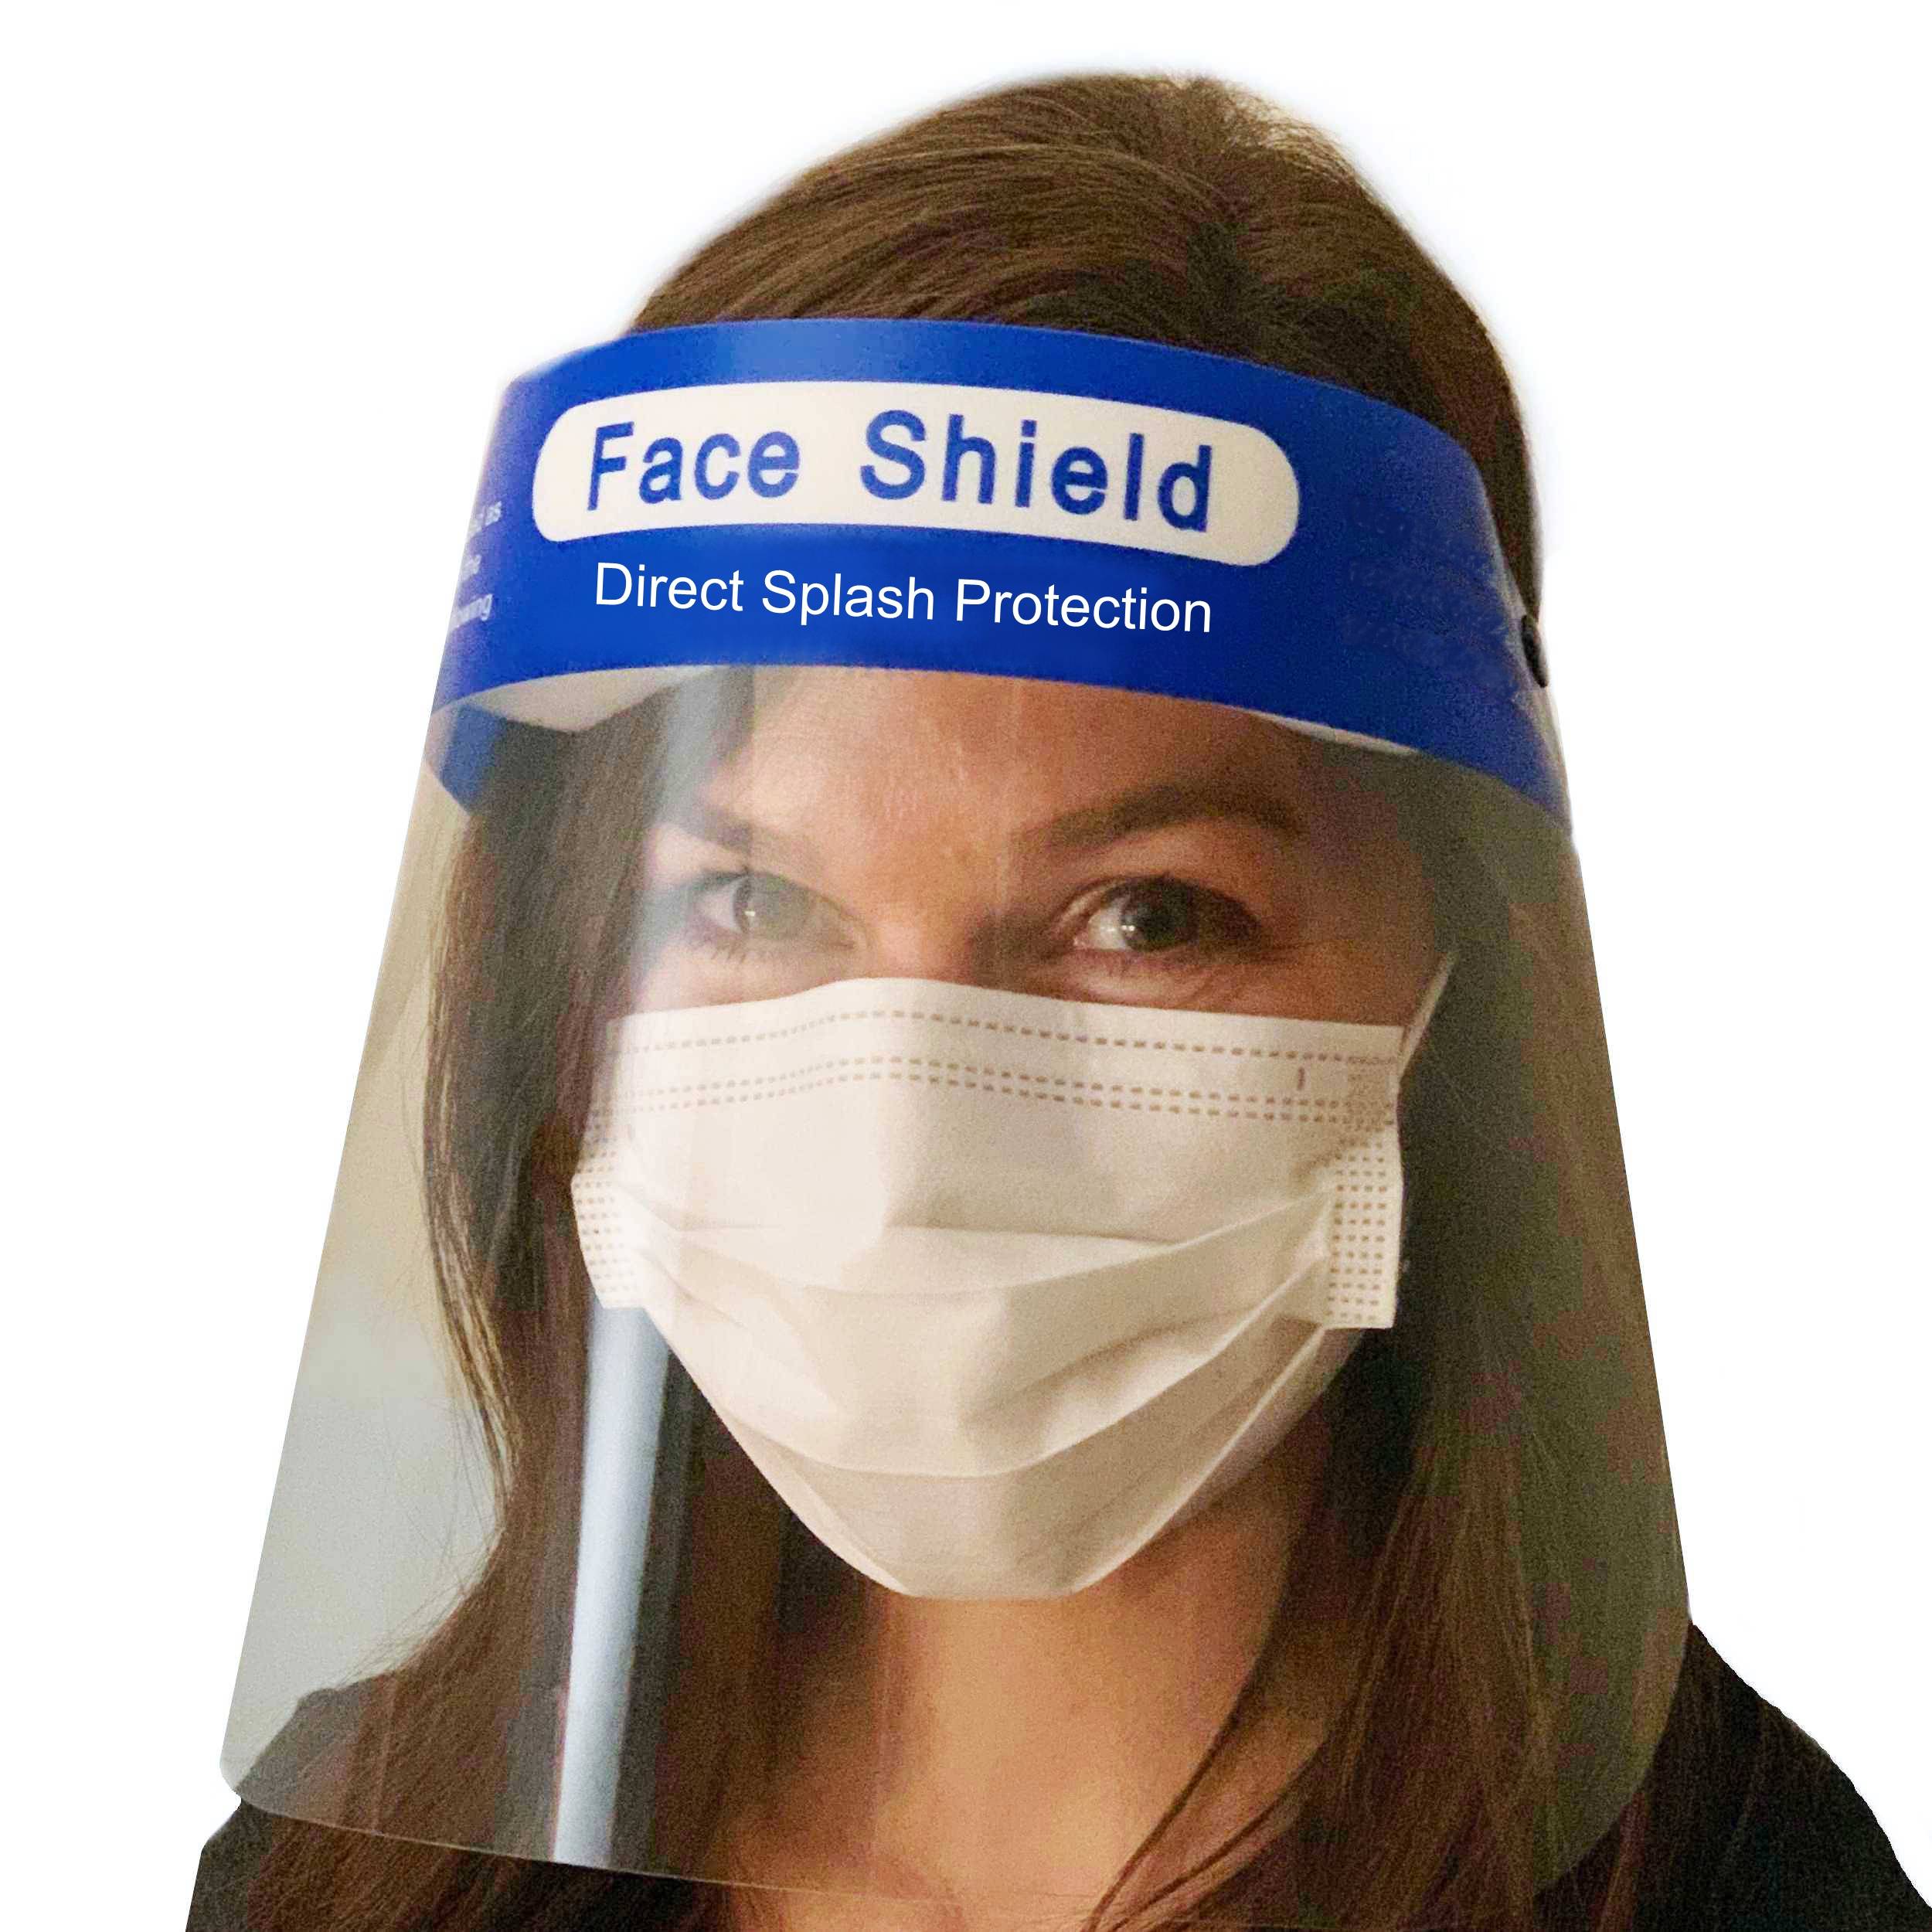 Shield anti fog face clear